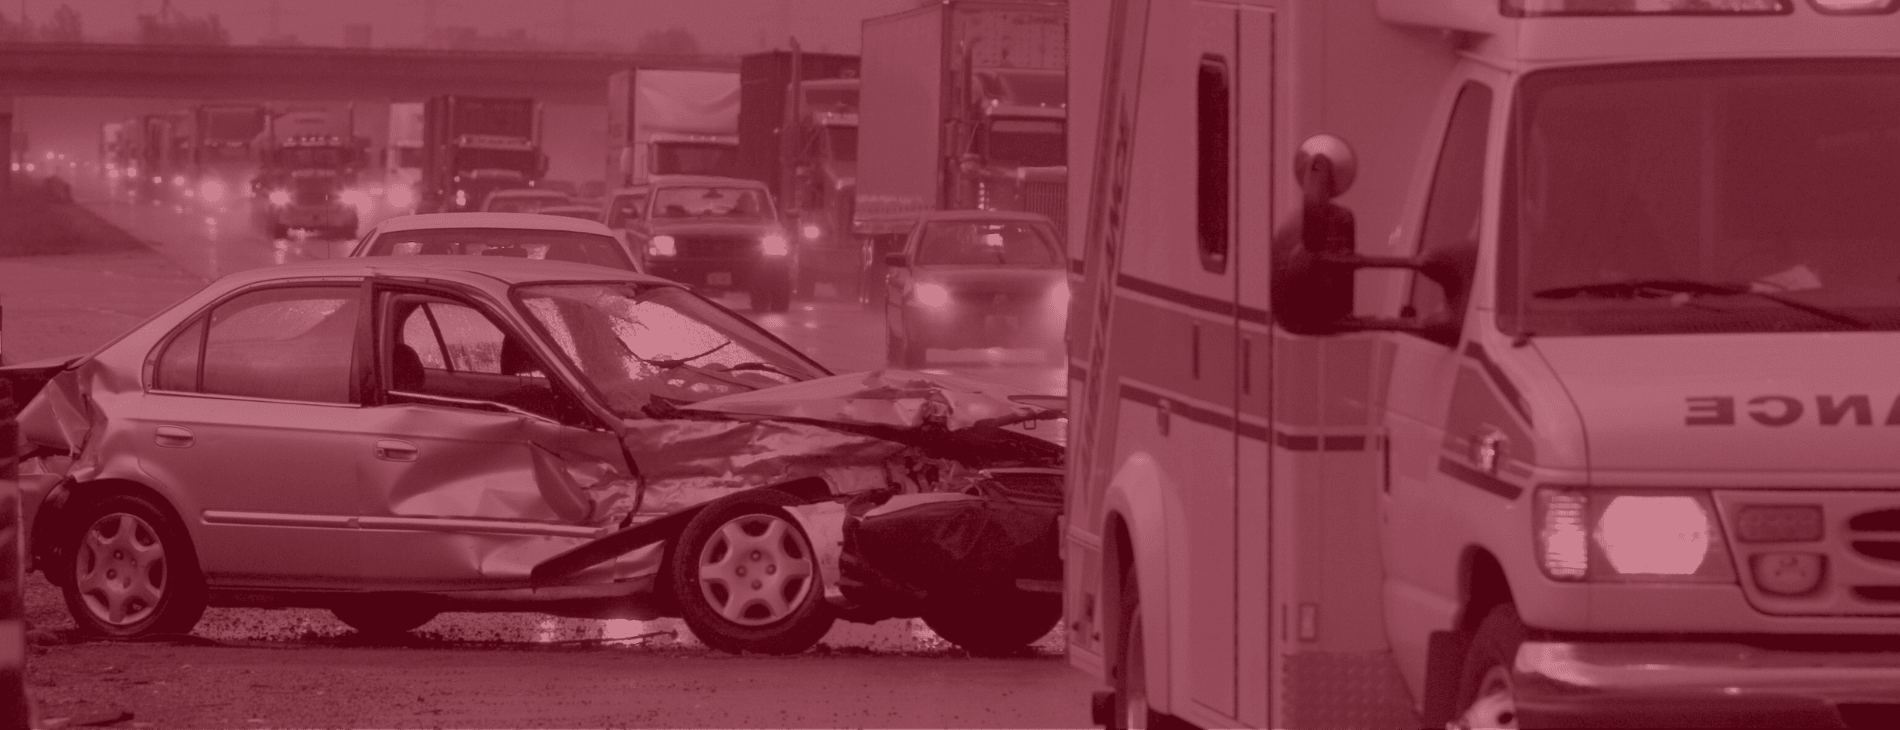 Interstate 5 car crash